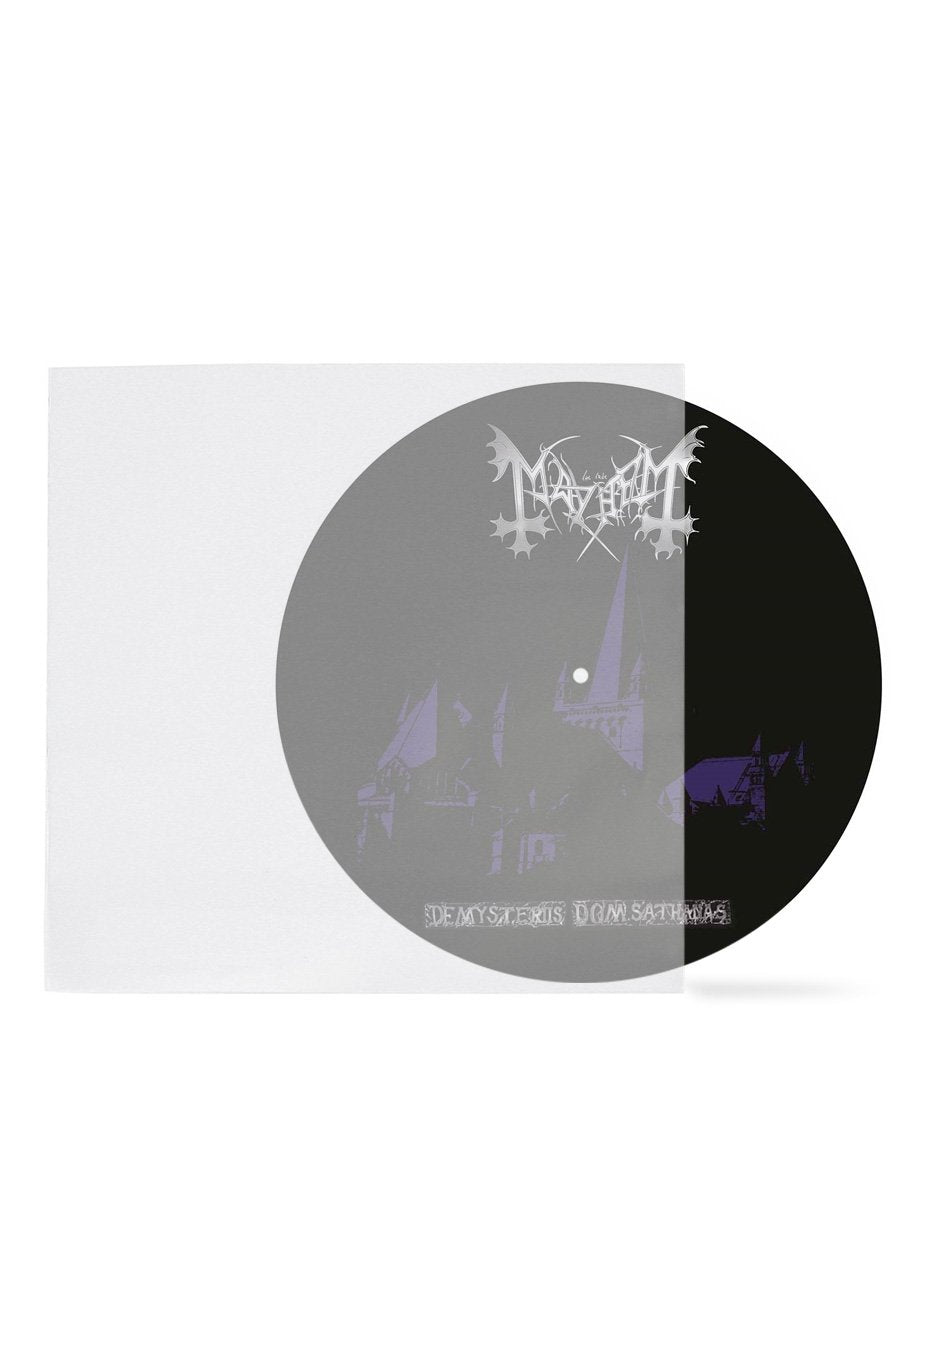 Mayhem - De Mysteriis Dom Sathanas - Picture Vinyl